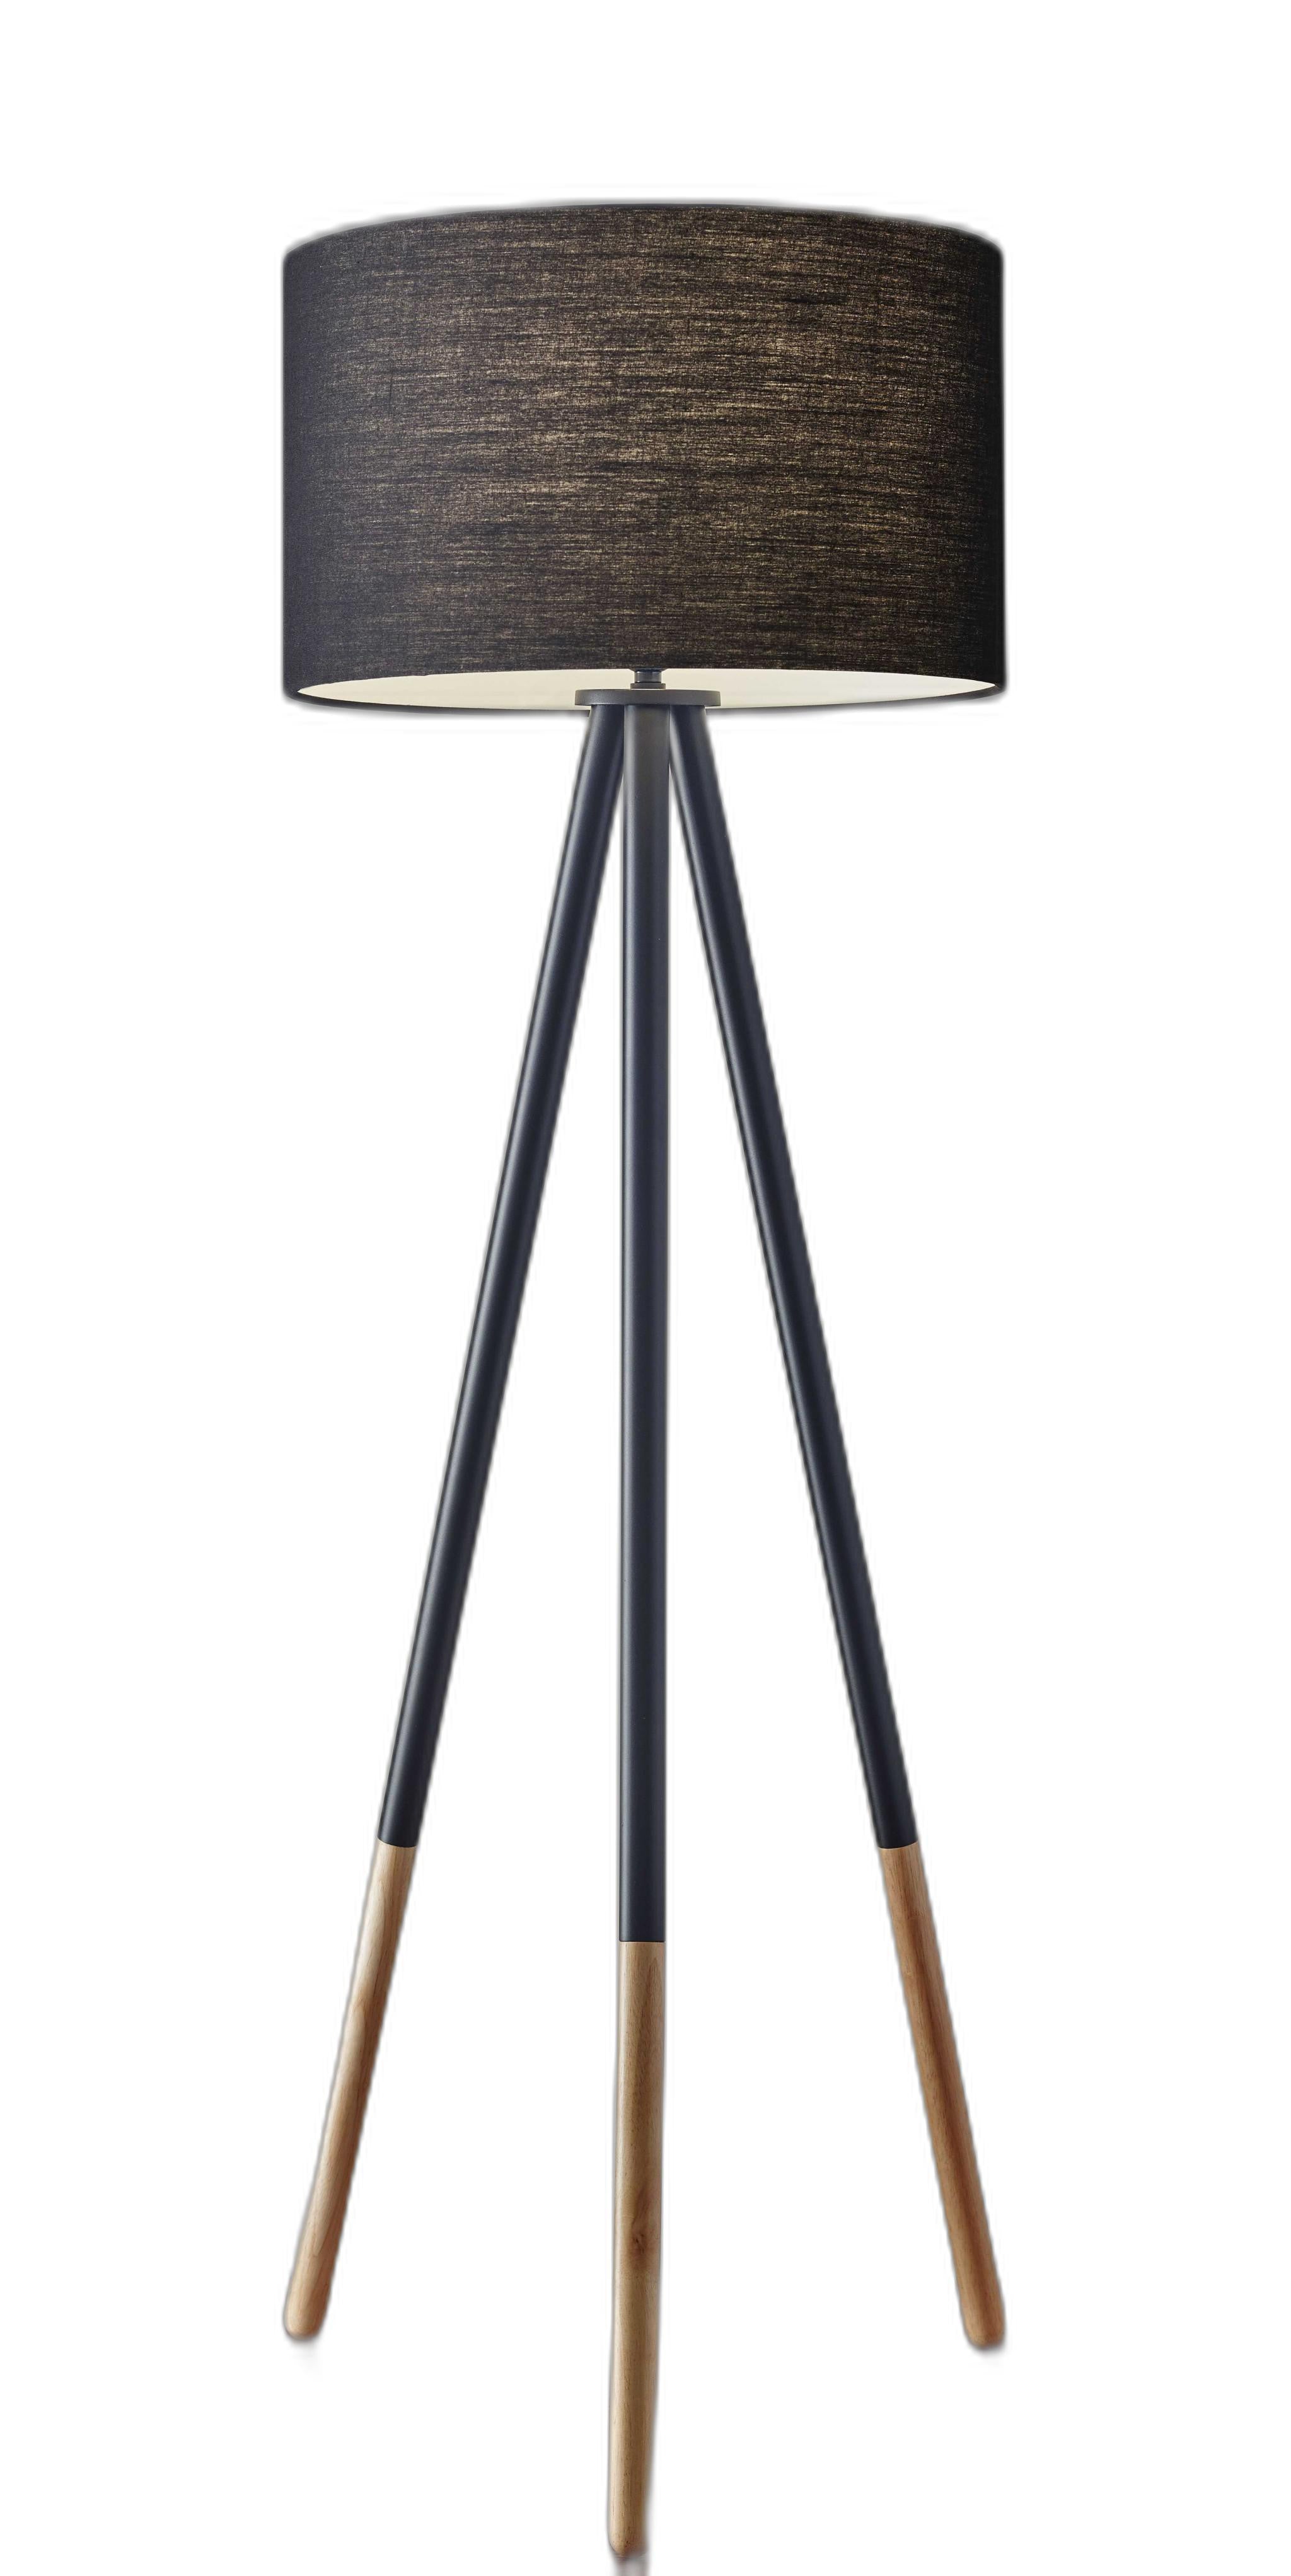 60" Black Tripod Floor Lamp With Black Drum Shade